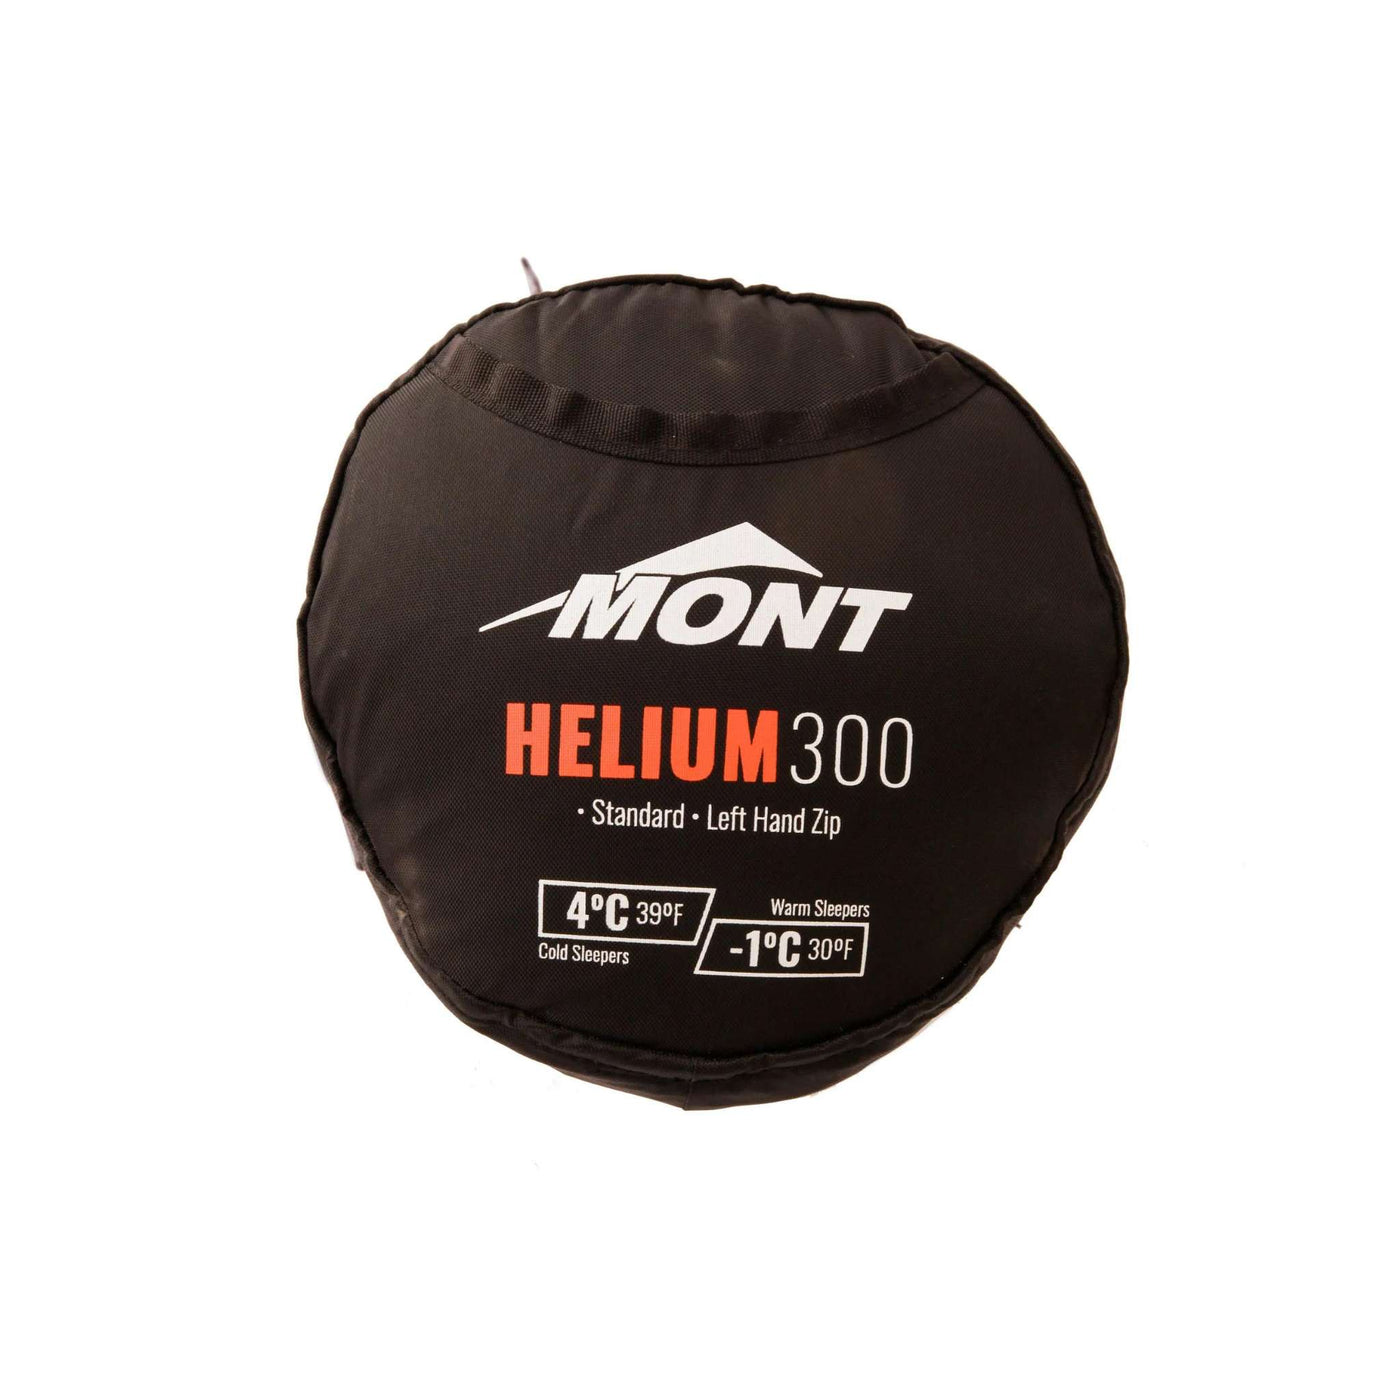 Mont Helium 300 4 to -1°C Down Sleeping Bag - Standard Left Hand Zip | Down Sleeping Bags NZ | Further Faster Christchurch NZ